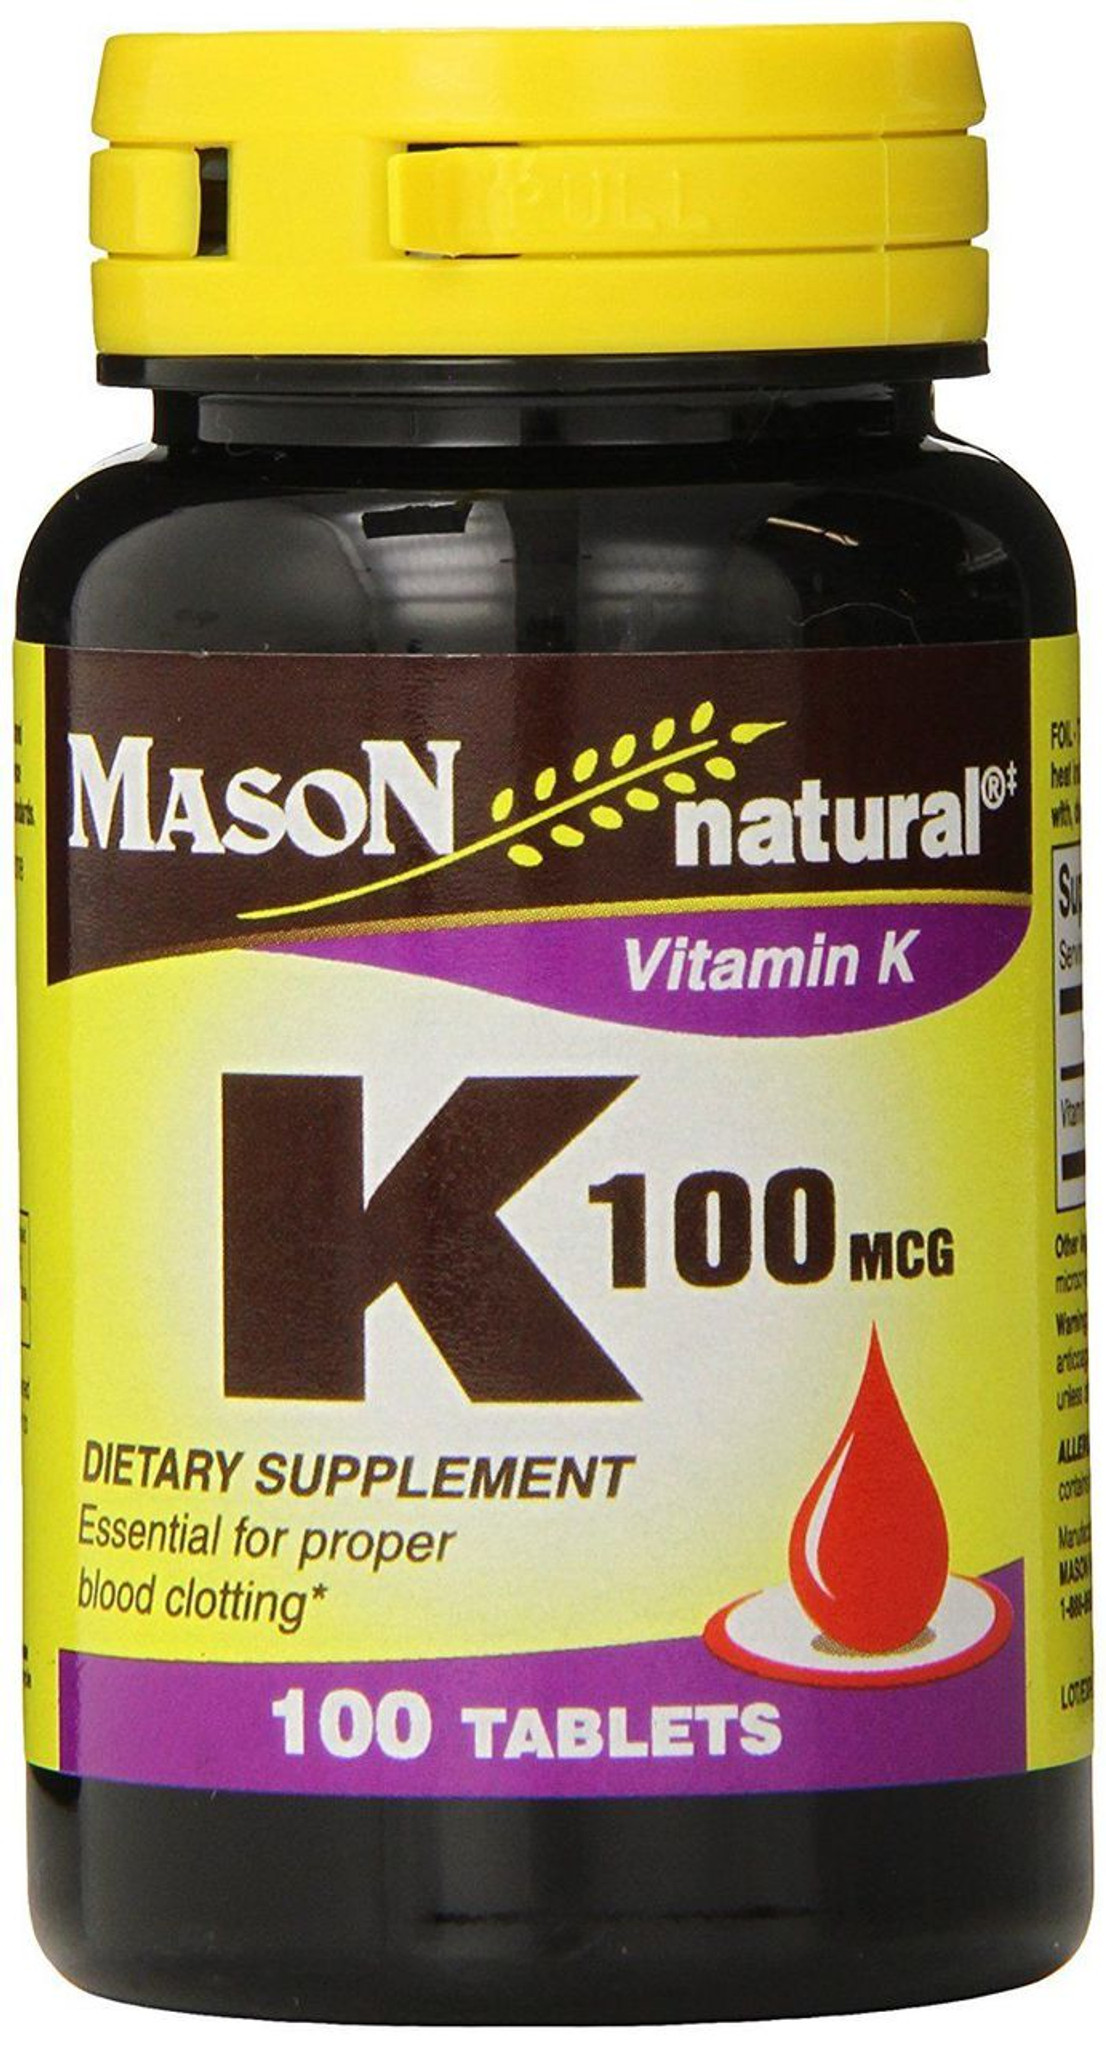 mason-vitamins-vitamin-k-100-mcg-tablets-100-count-bottle